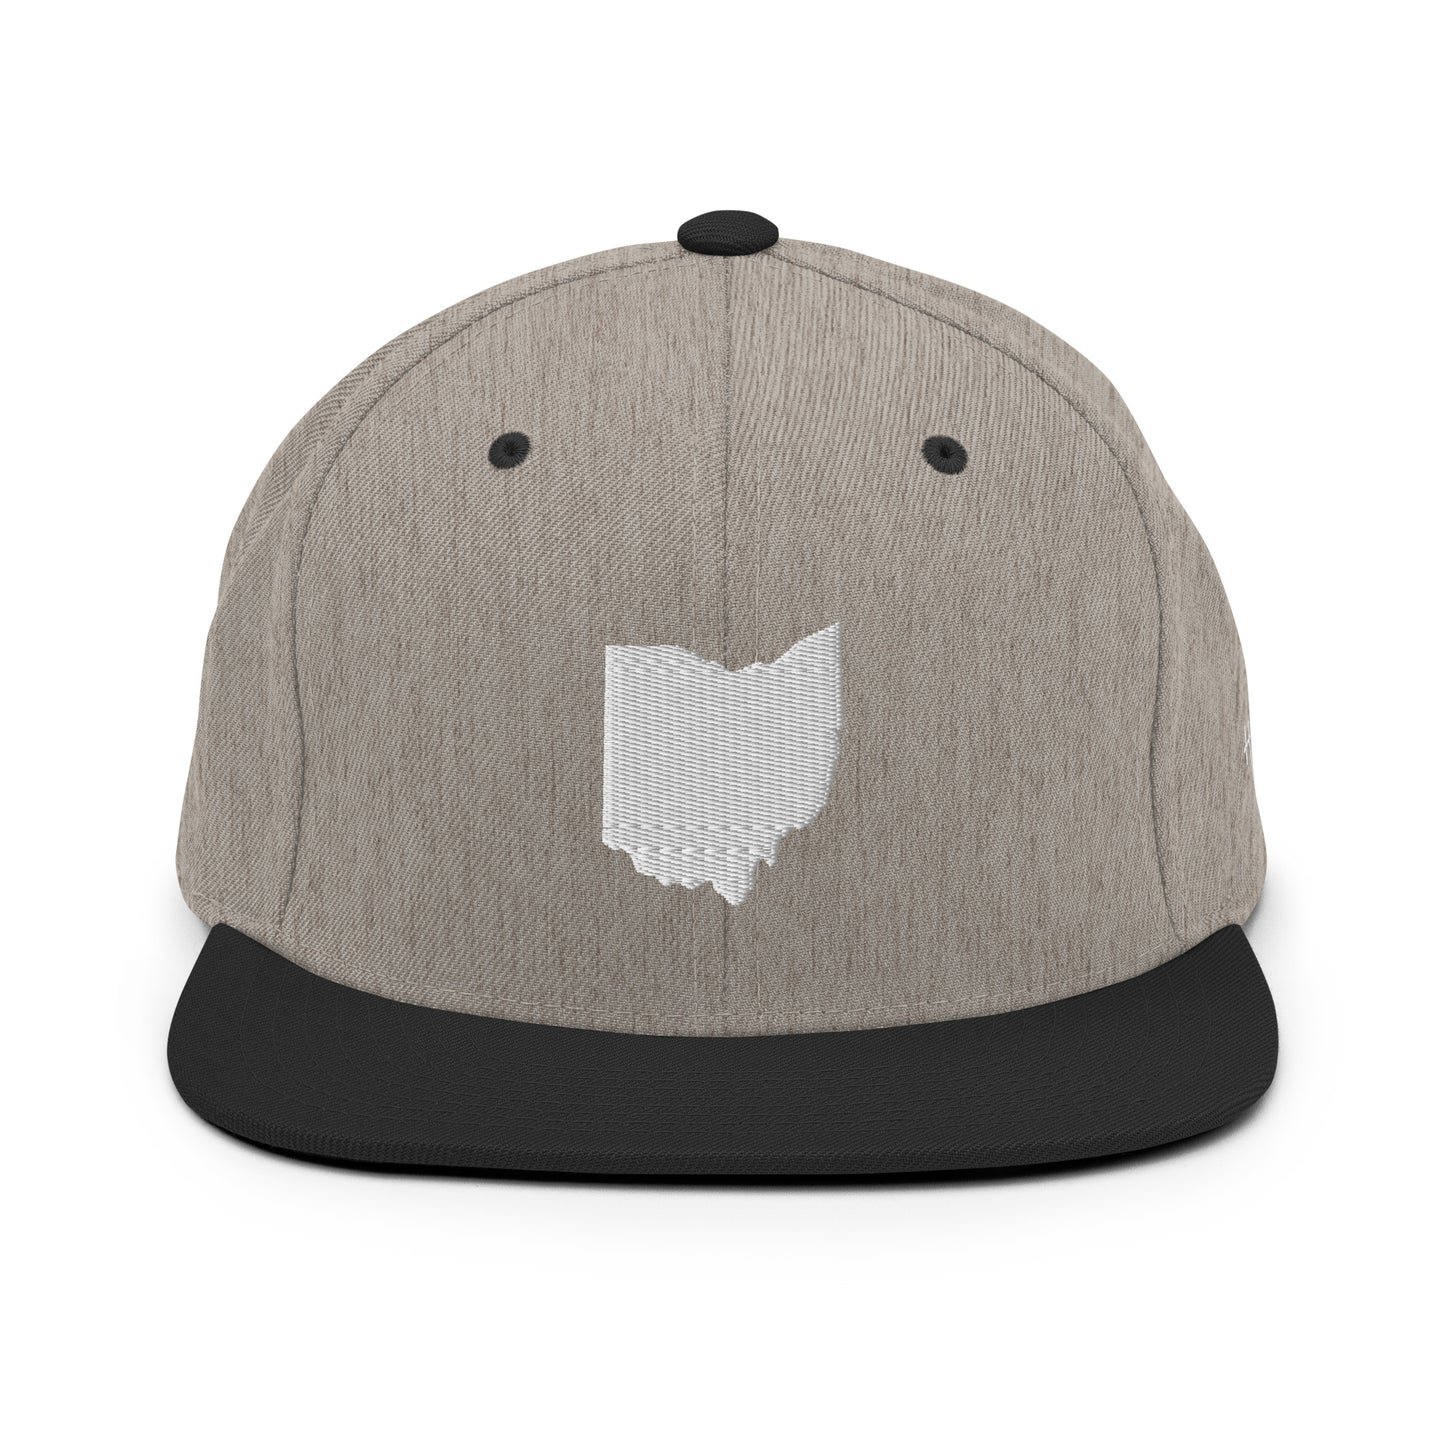 Ohio State Silhouette 6 Panel Snapback Hat